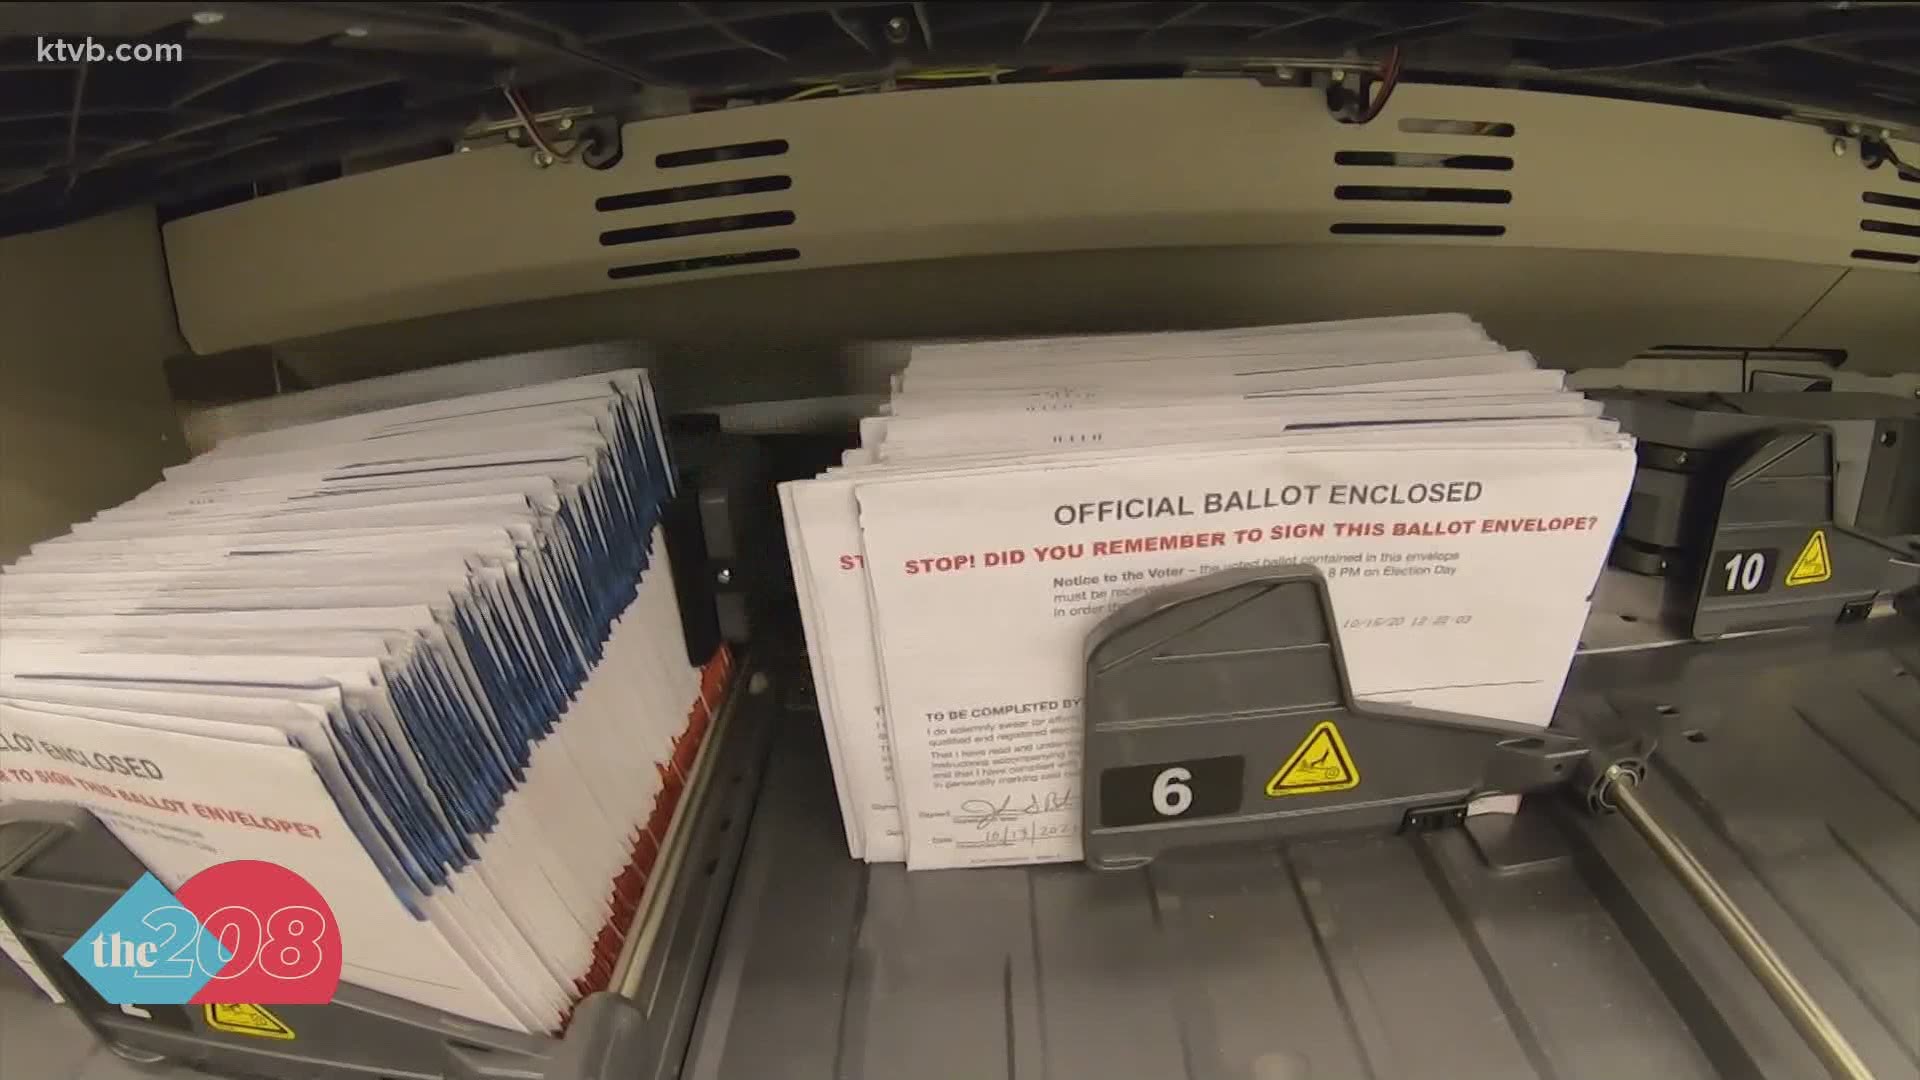 New legislation targeting ballot harvesting is now moving though the Idaho Statehouse.